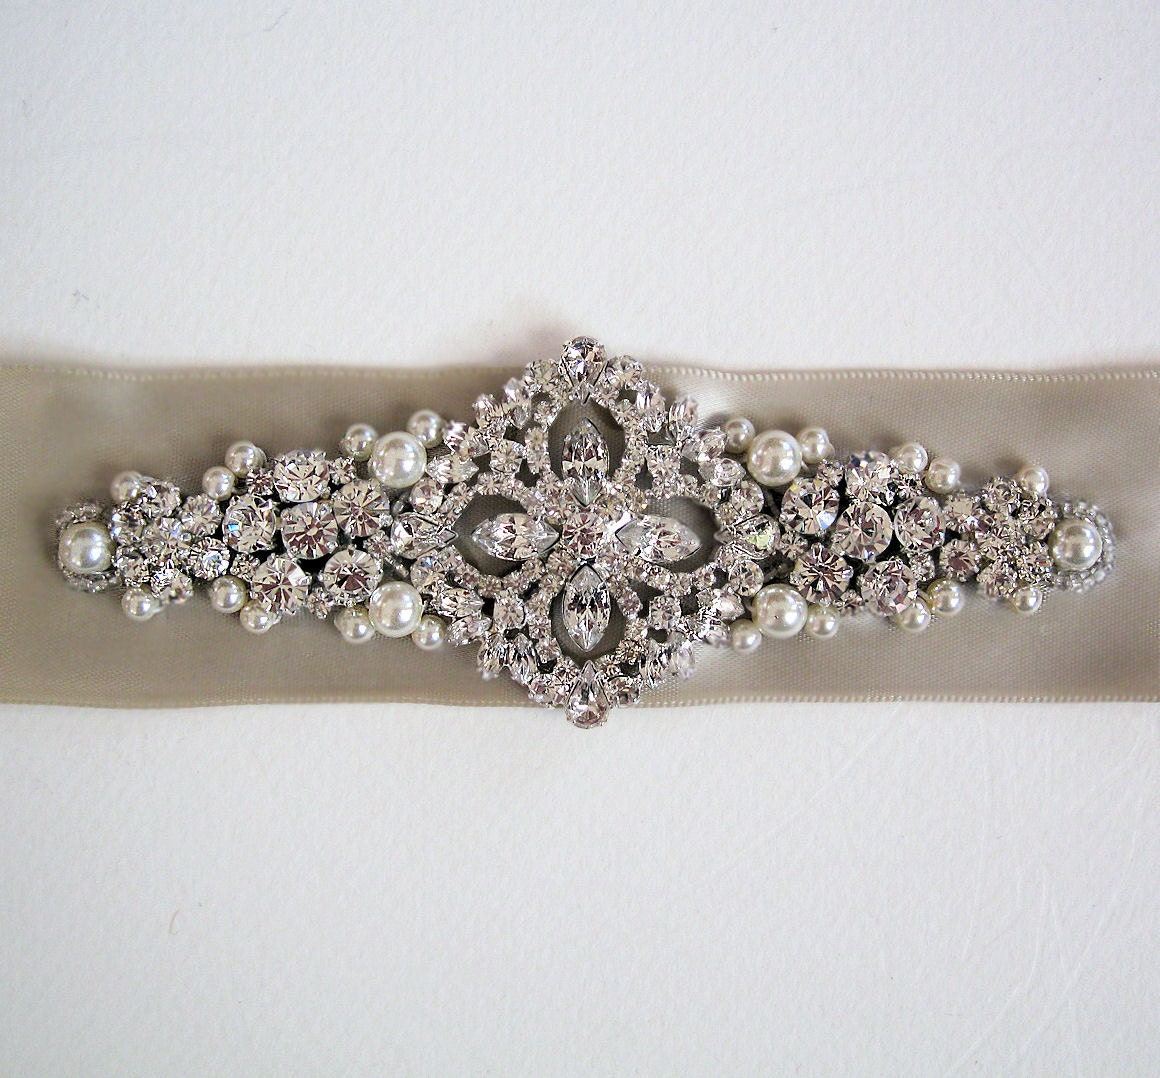 Modified Lovely rhinestone and pearl bridal sash, SHORTER rhinestone detail